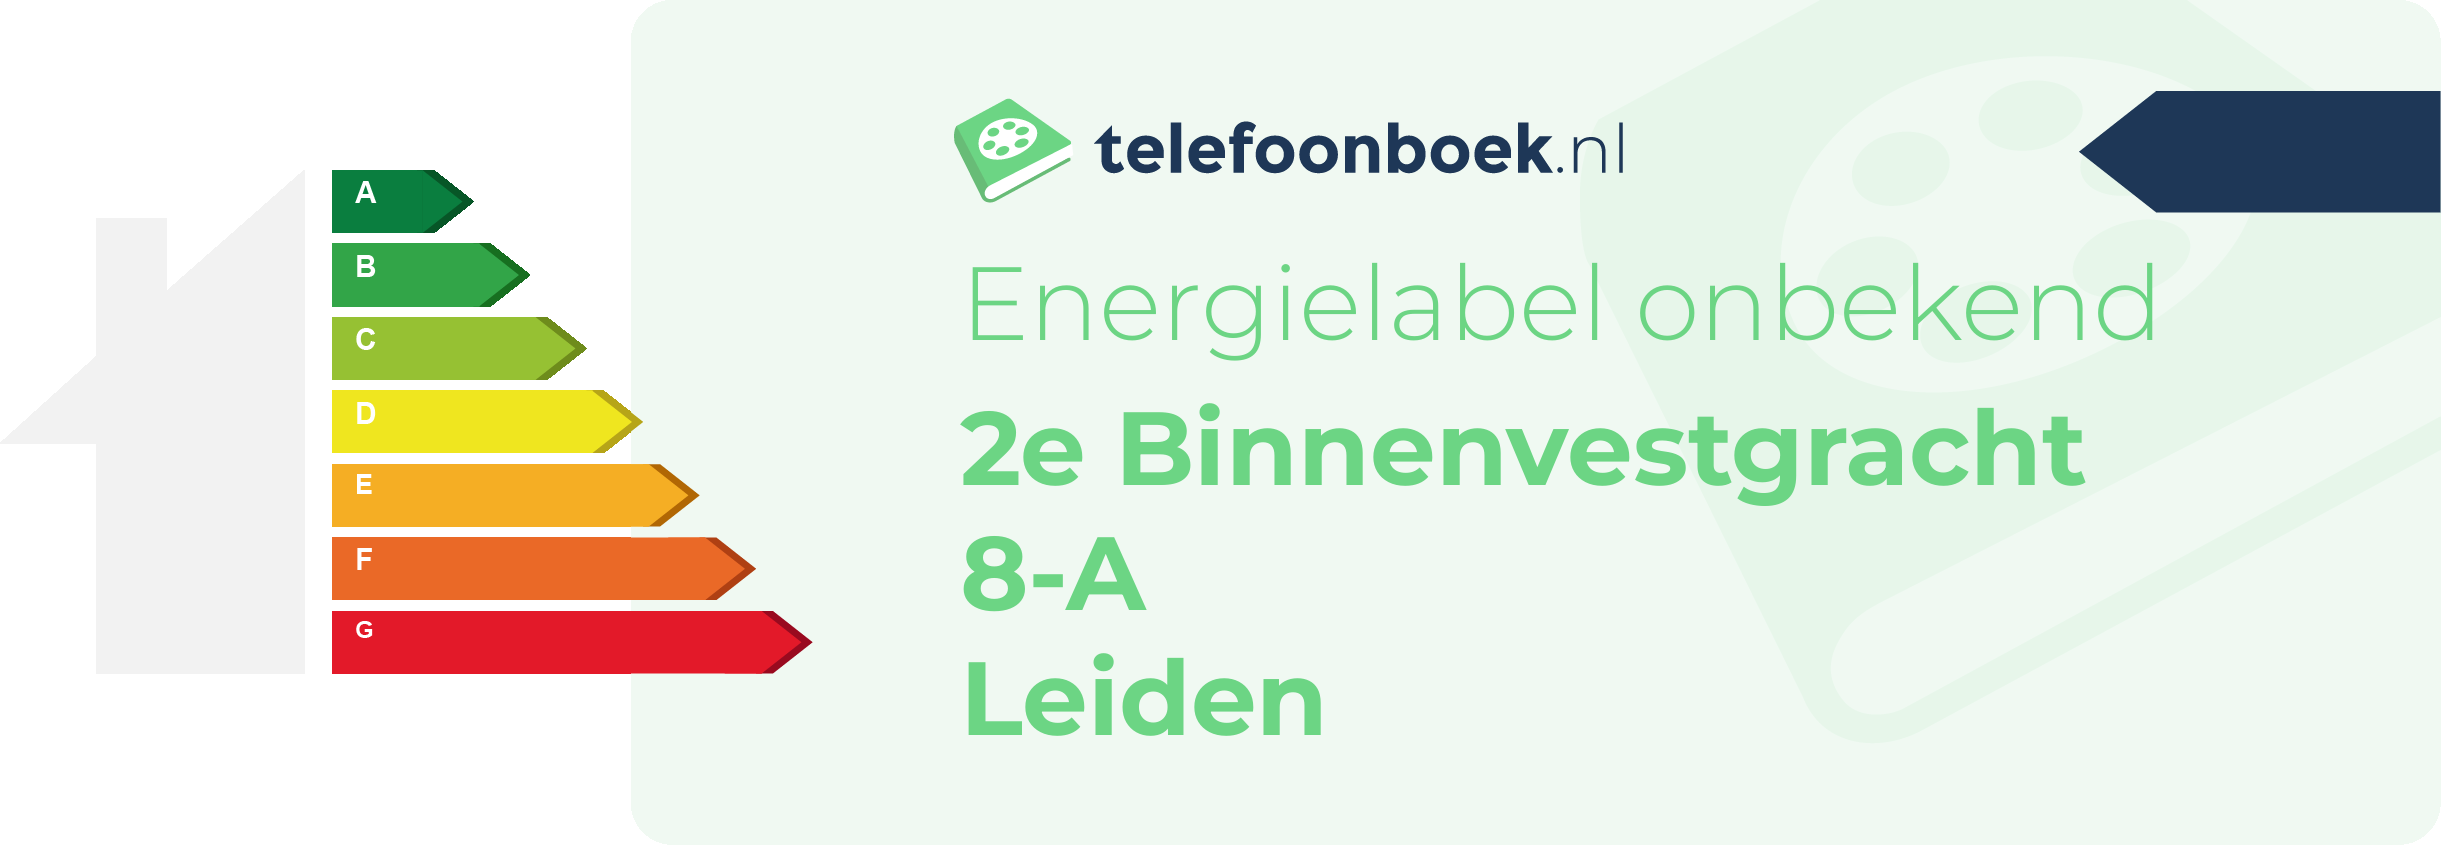 Energielabel 2e Binnenvestgracht 8-A Leiden